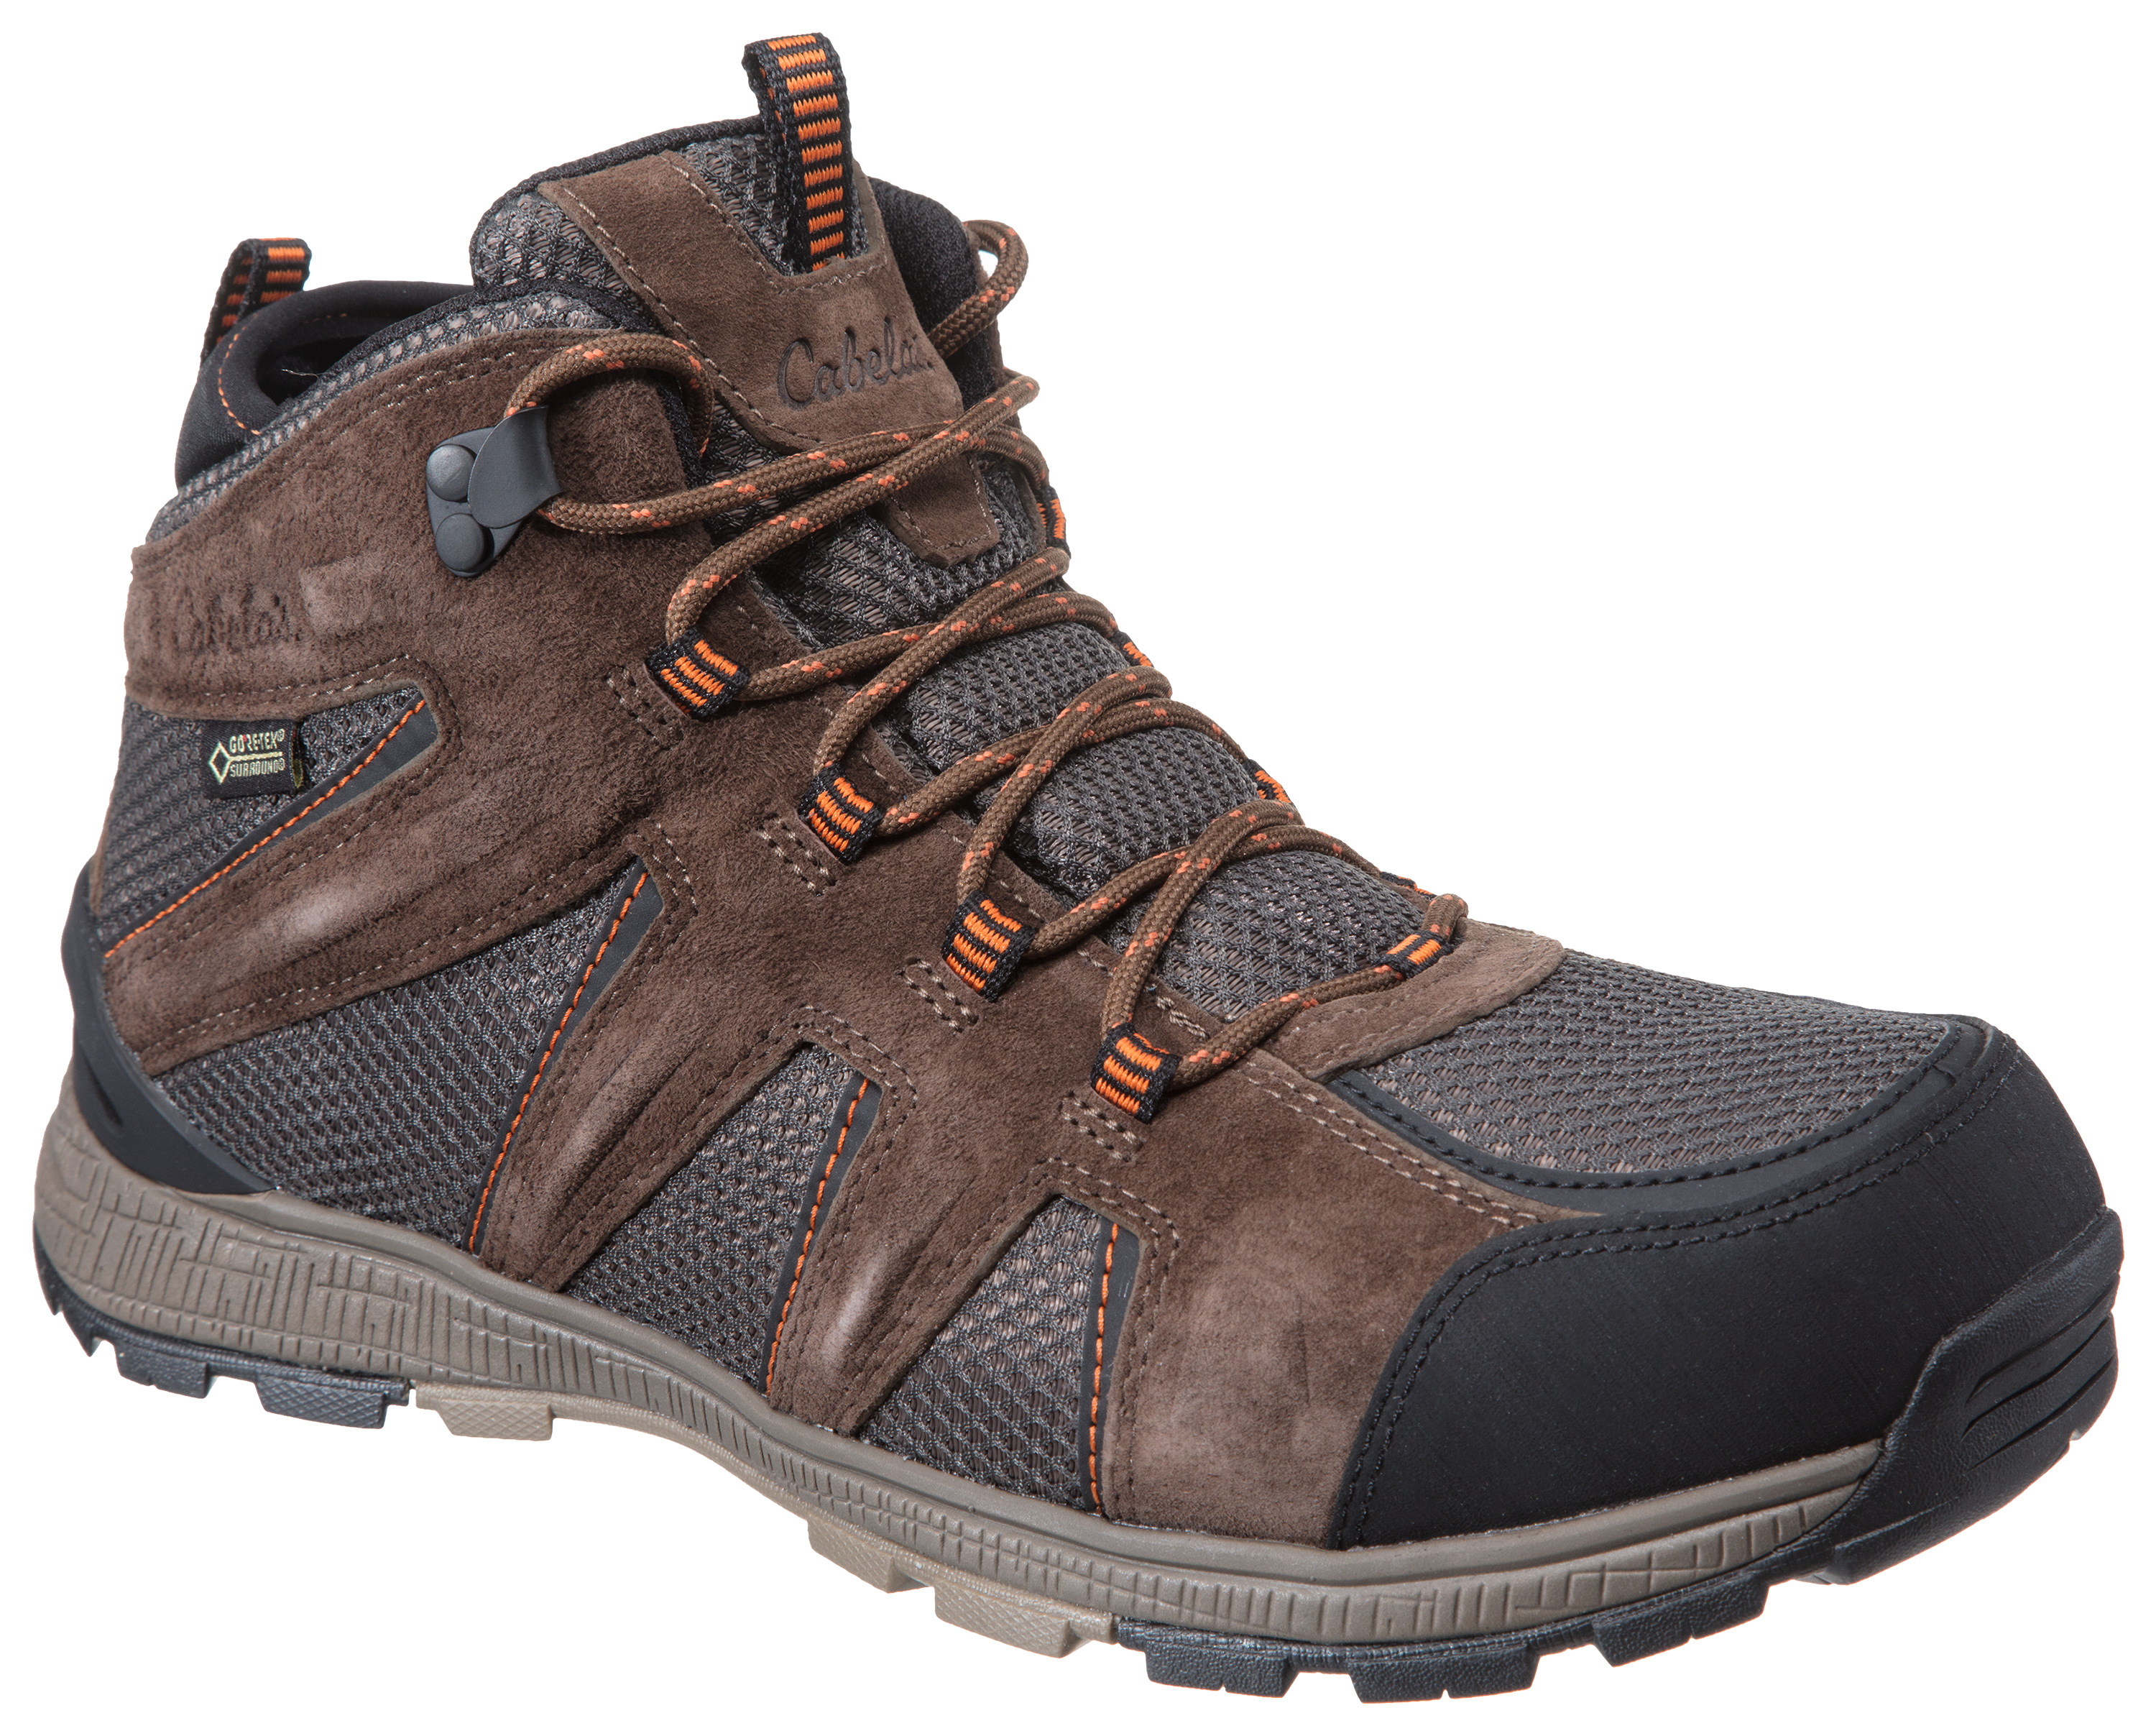 Cabela's 360 Mid GORE-TEX Hiking Boots for Men - Teak - 9.5M